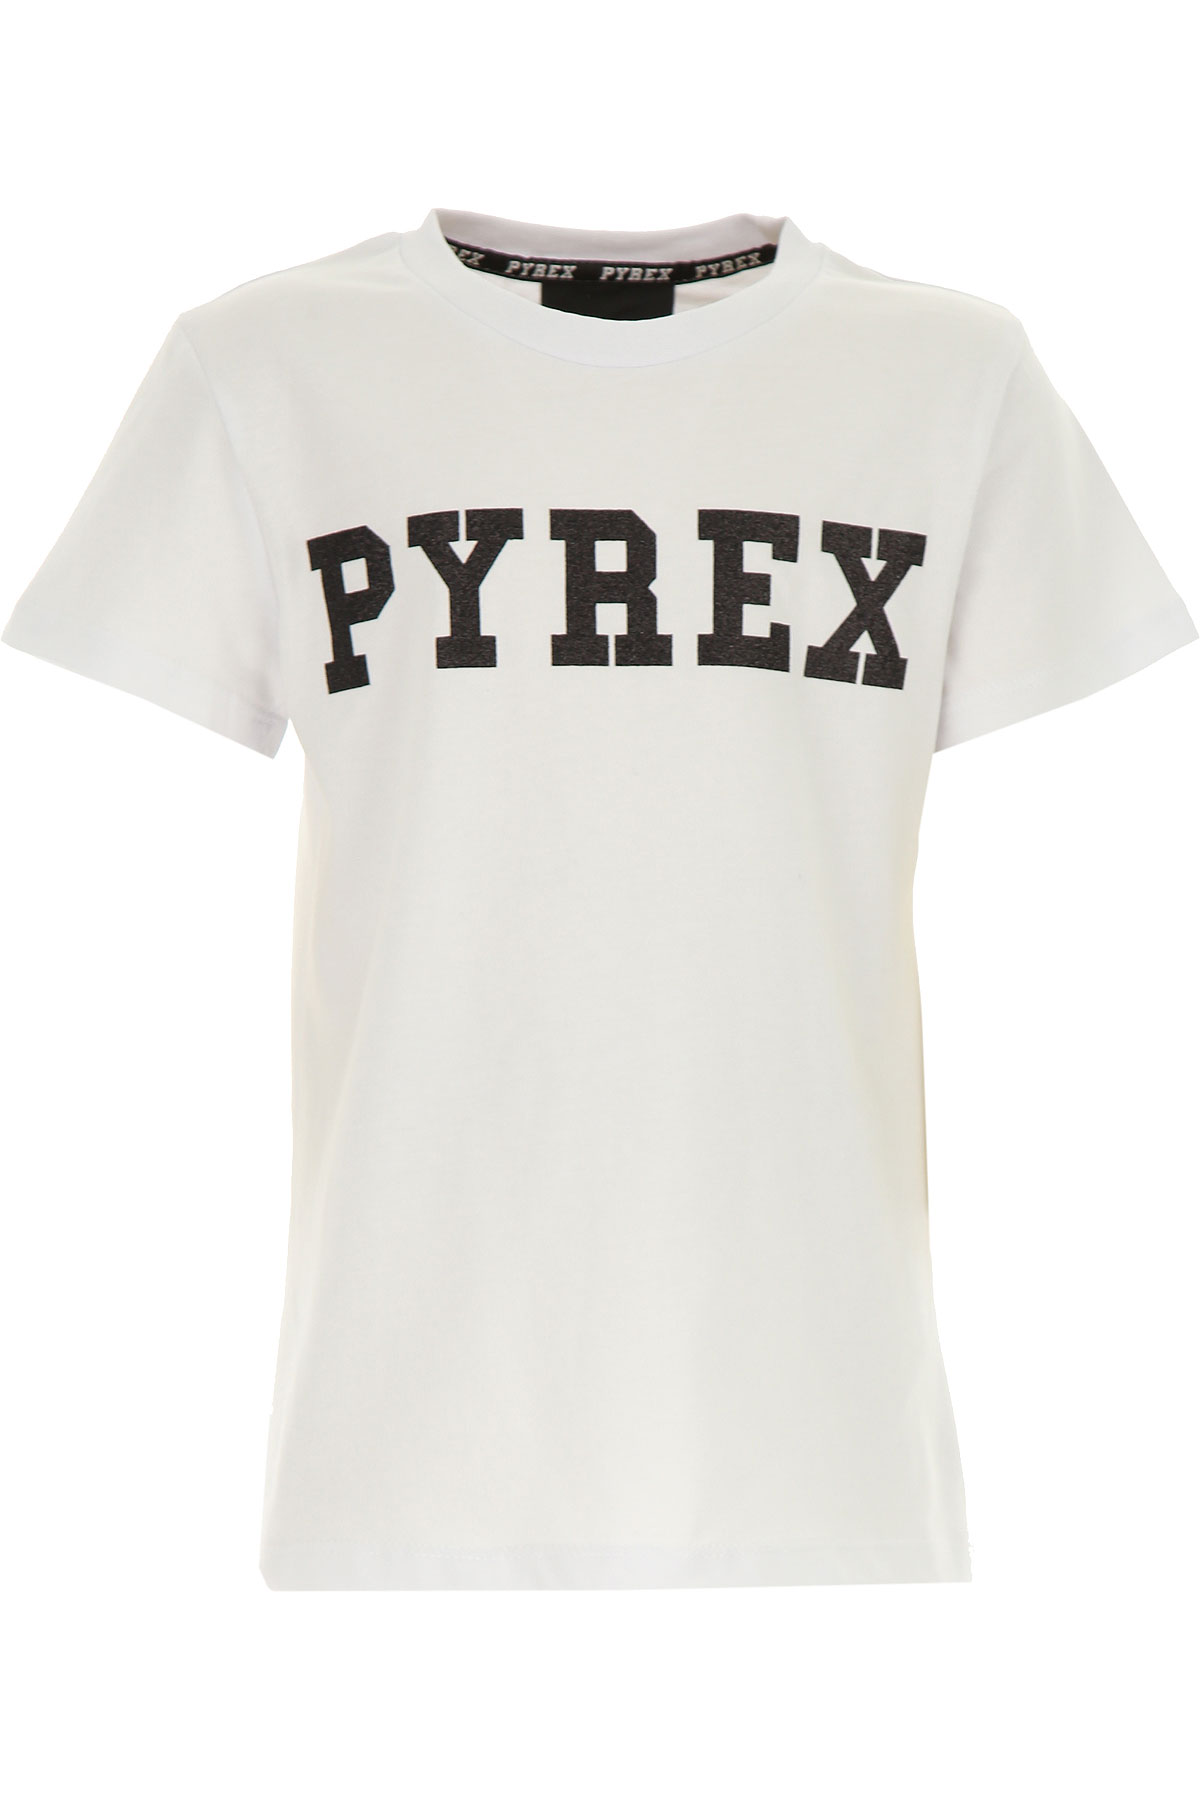 Girls Clothing Pyrex, Style code: 021175-001-